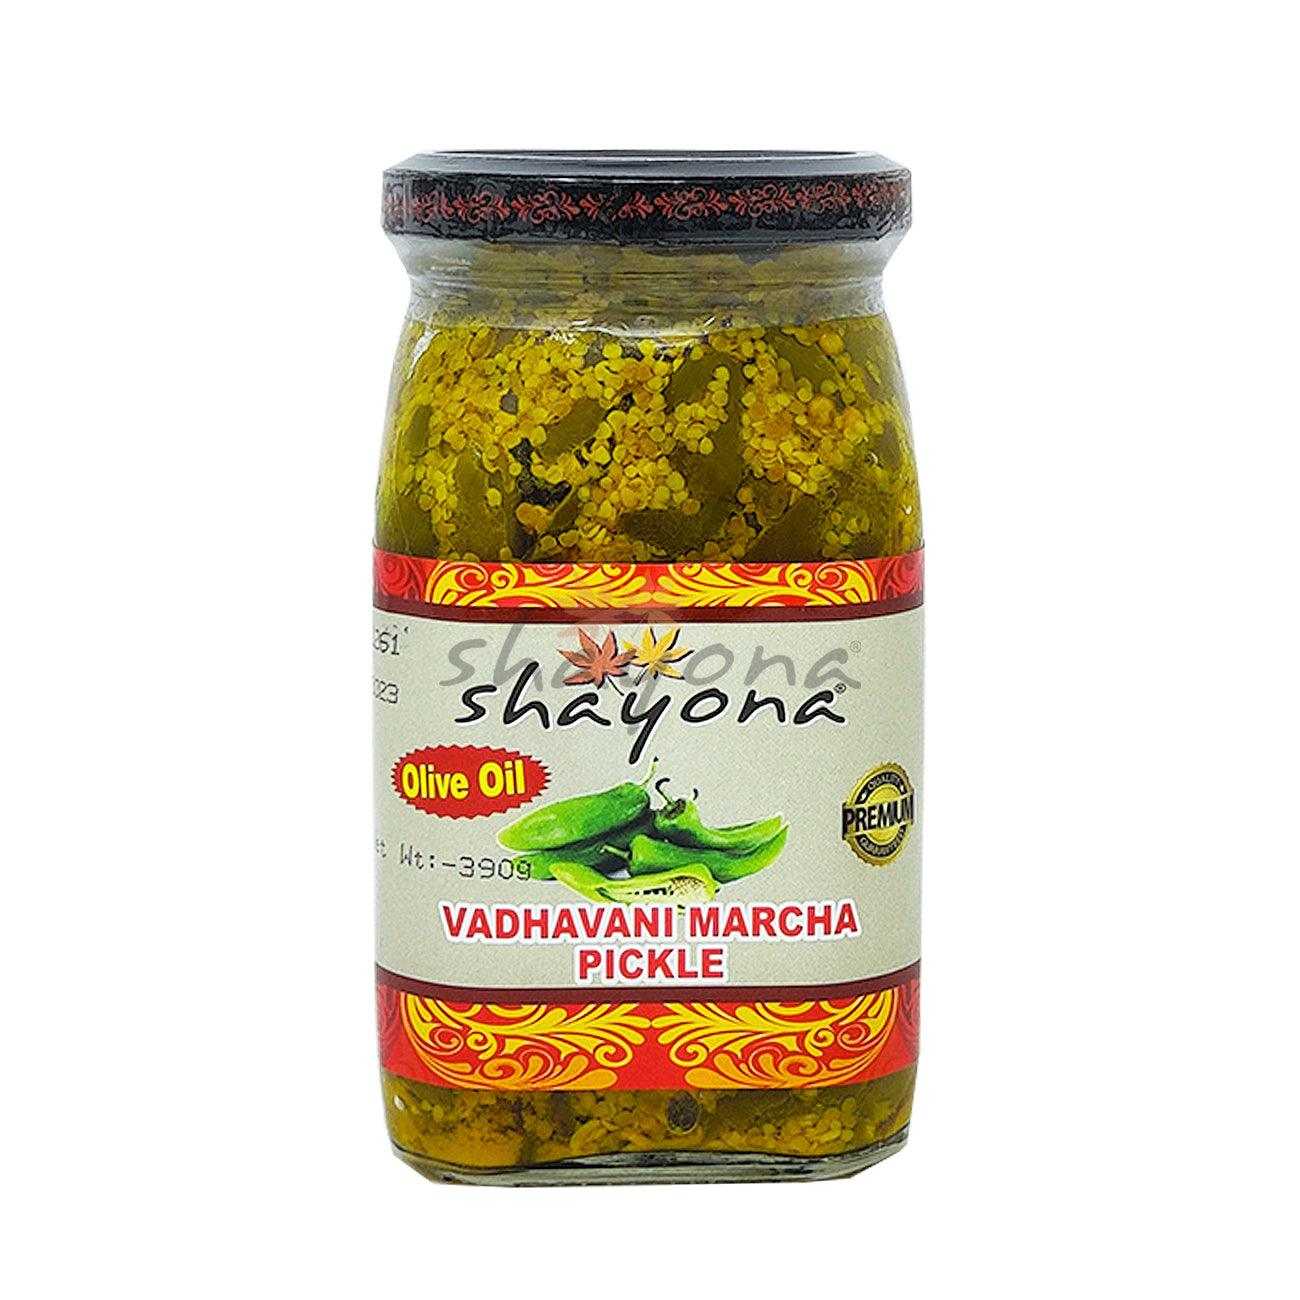 Shayona Vadhavani Marcha Pickle Olive Oil